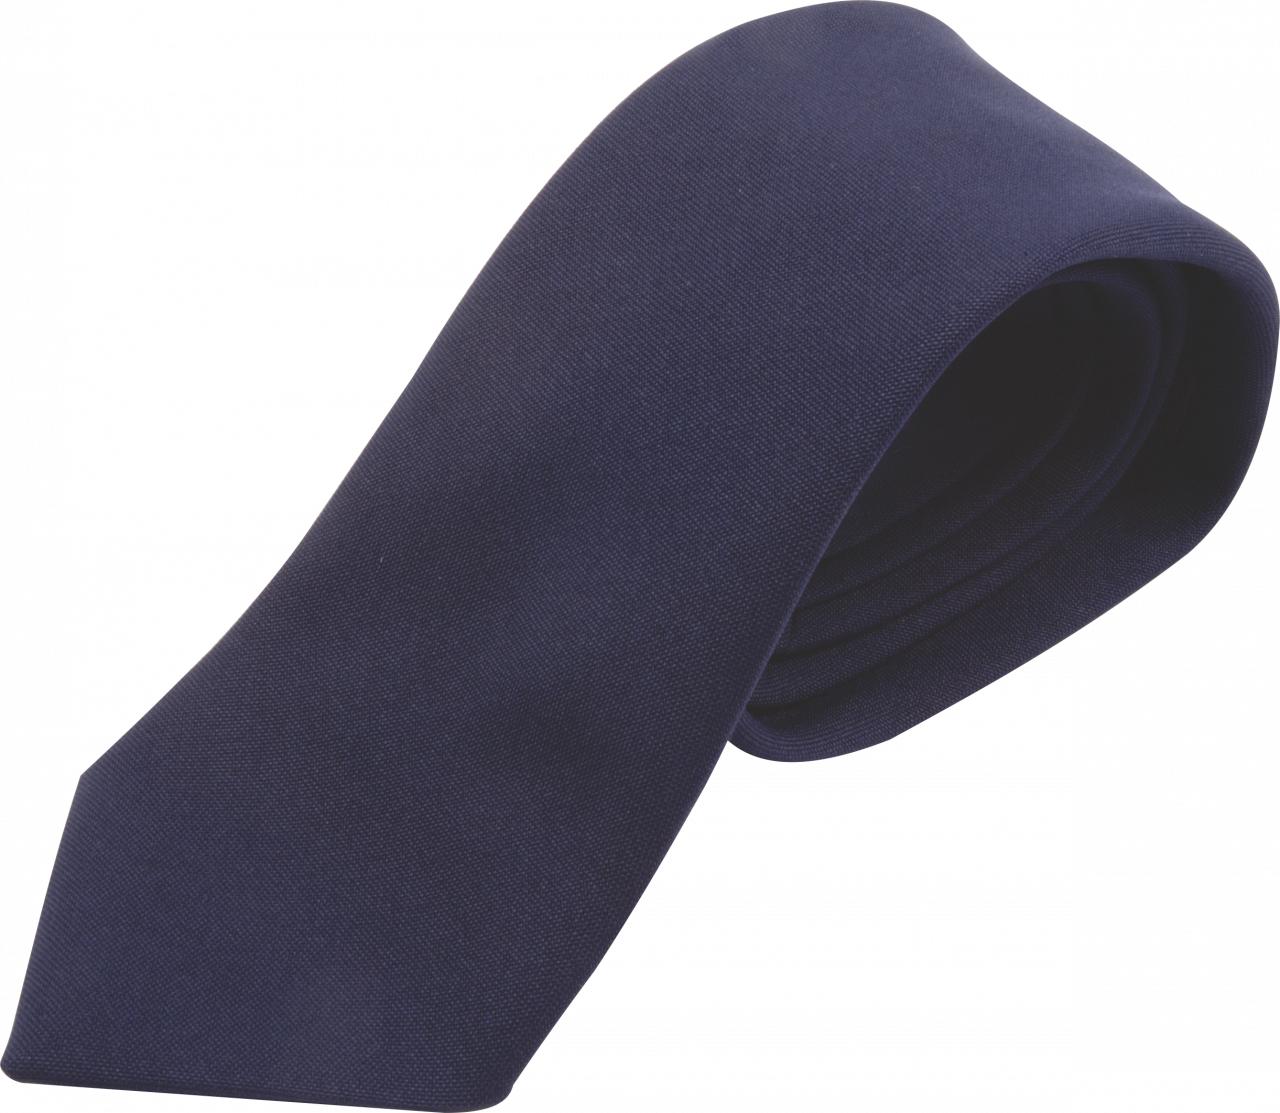 Tie Uniform. Avail in Black or Navy